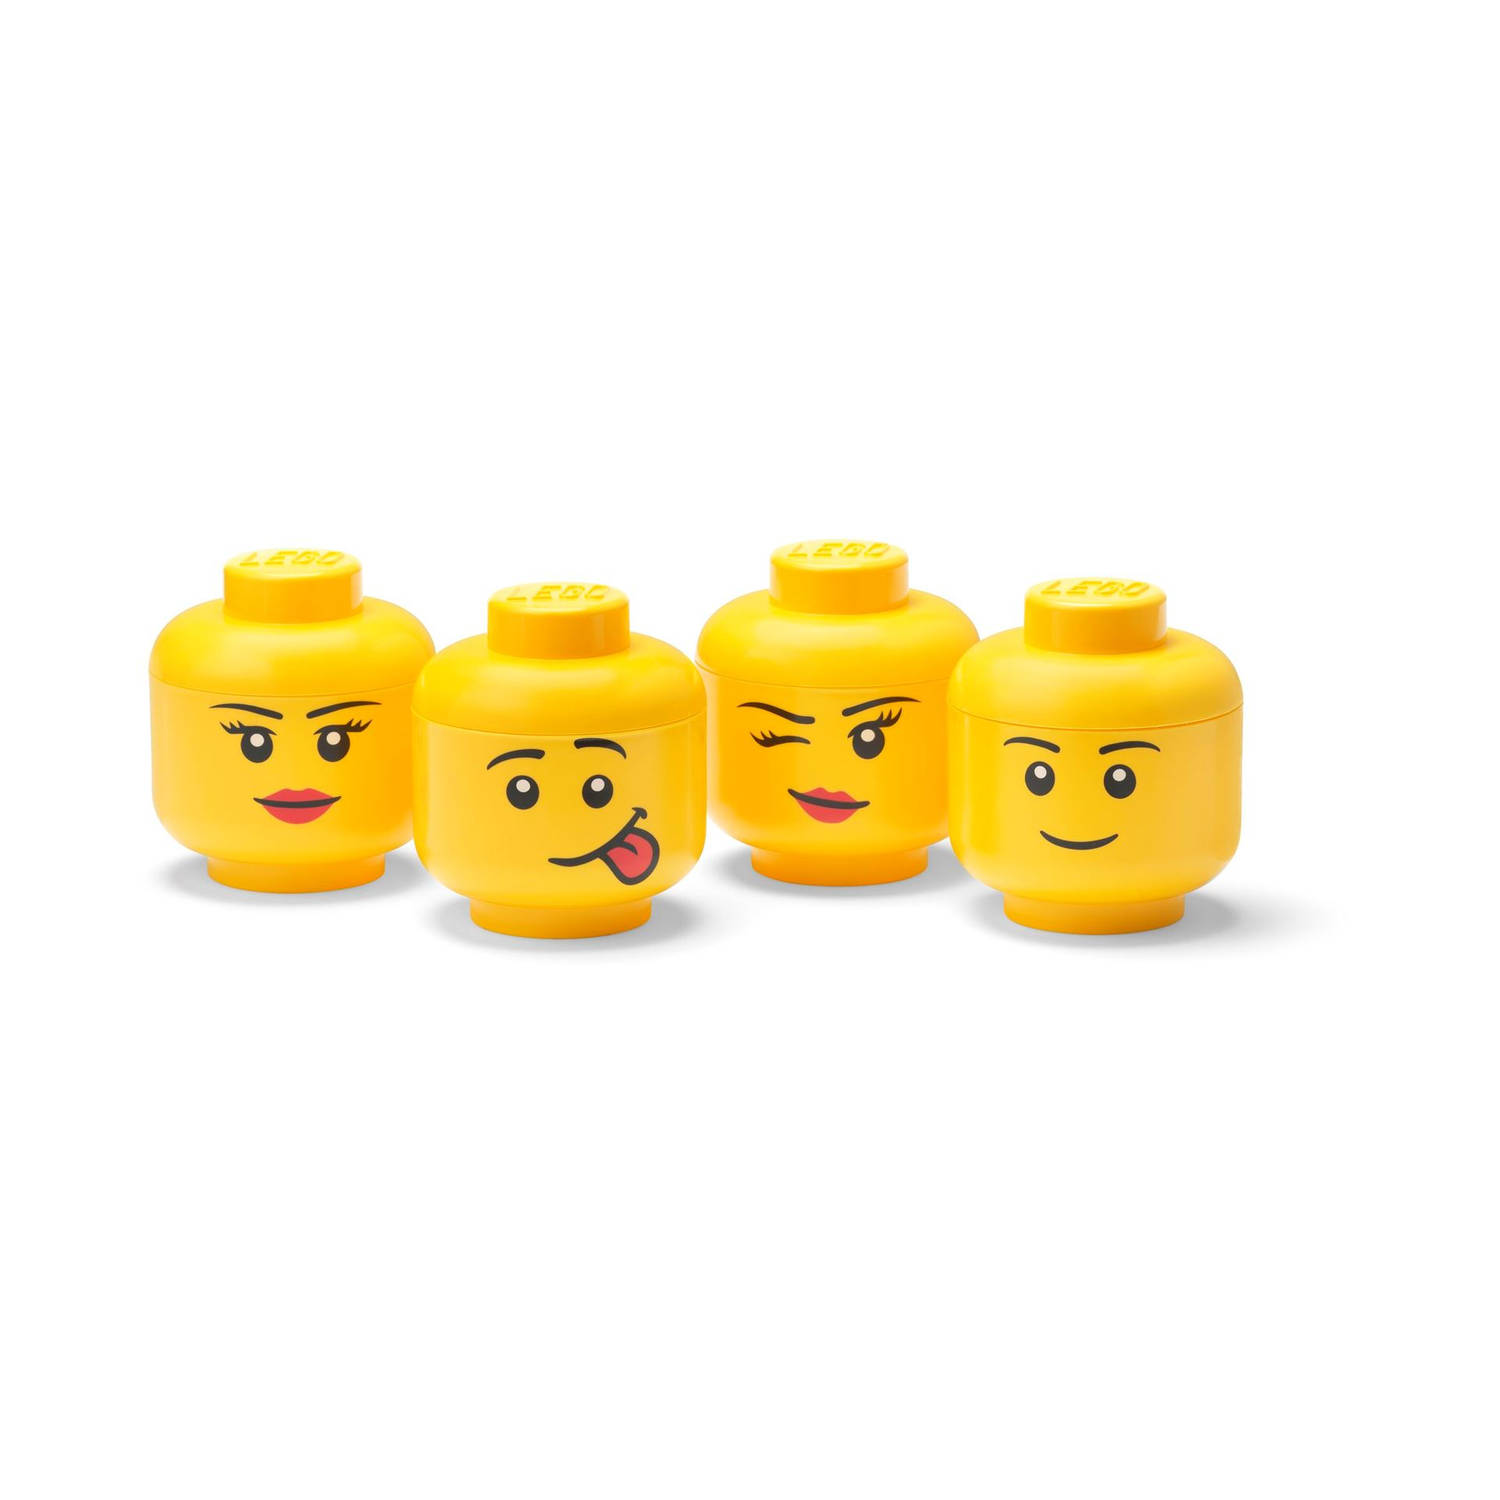 Lego - Storage Head Mini Set of 4 Pieces